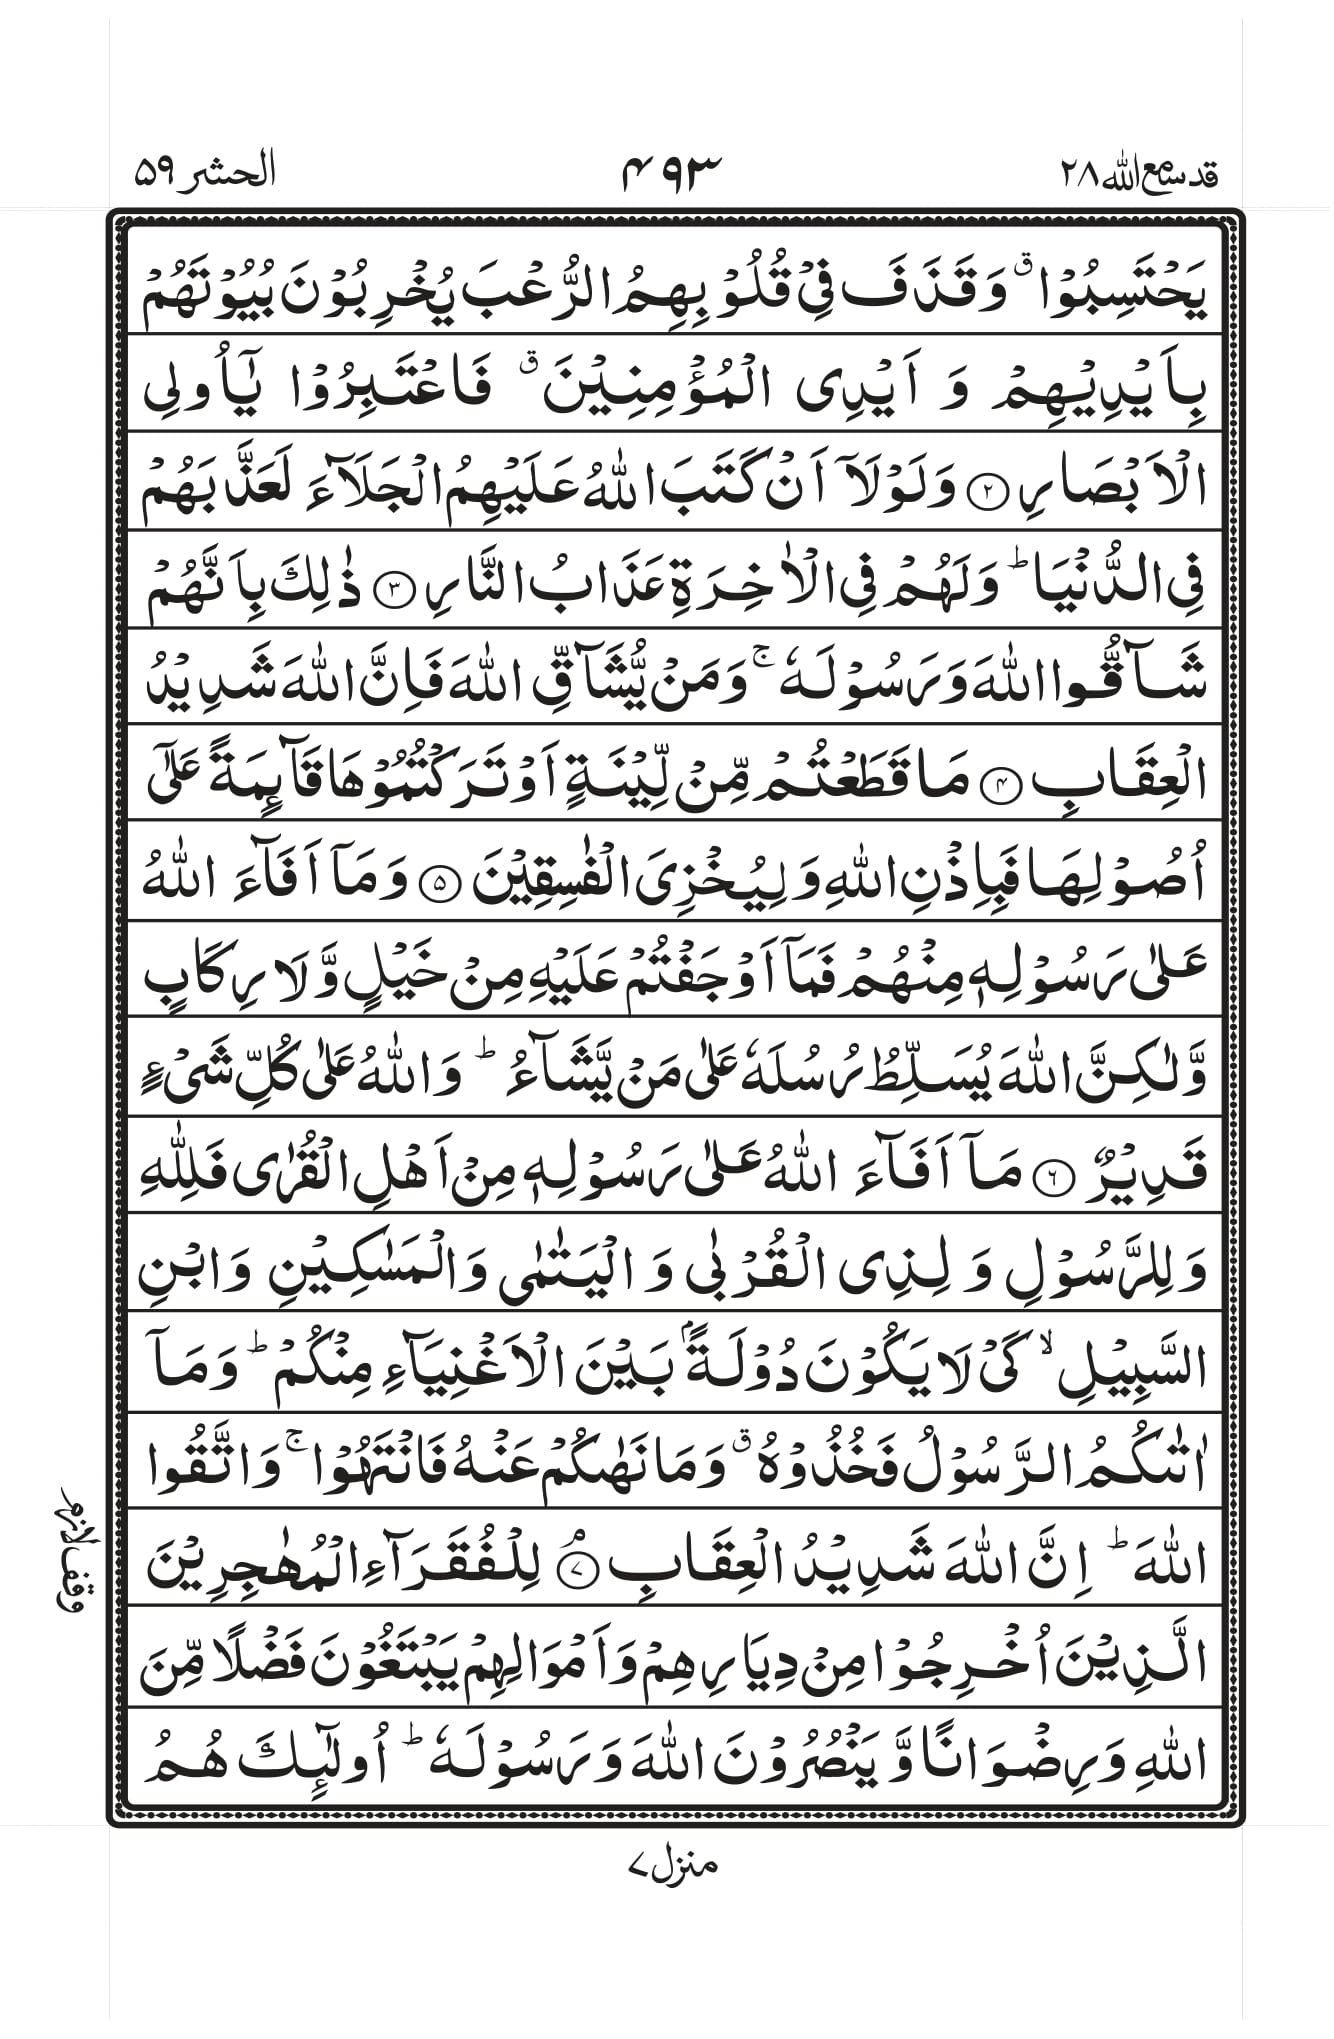 surah hashr in arabic